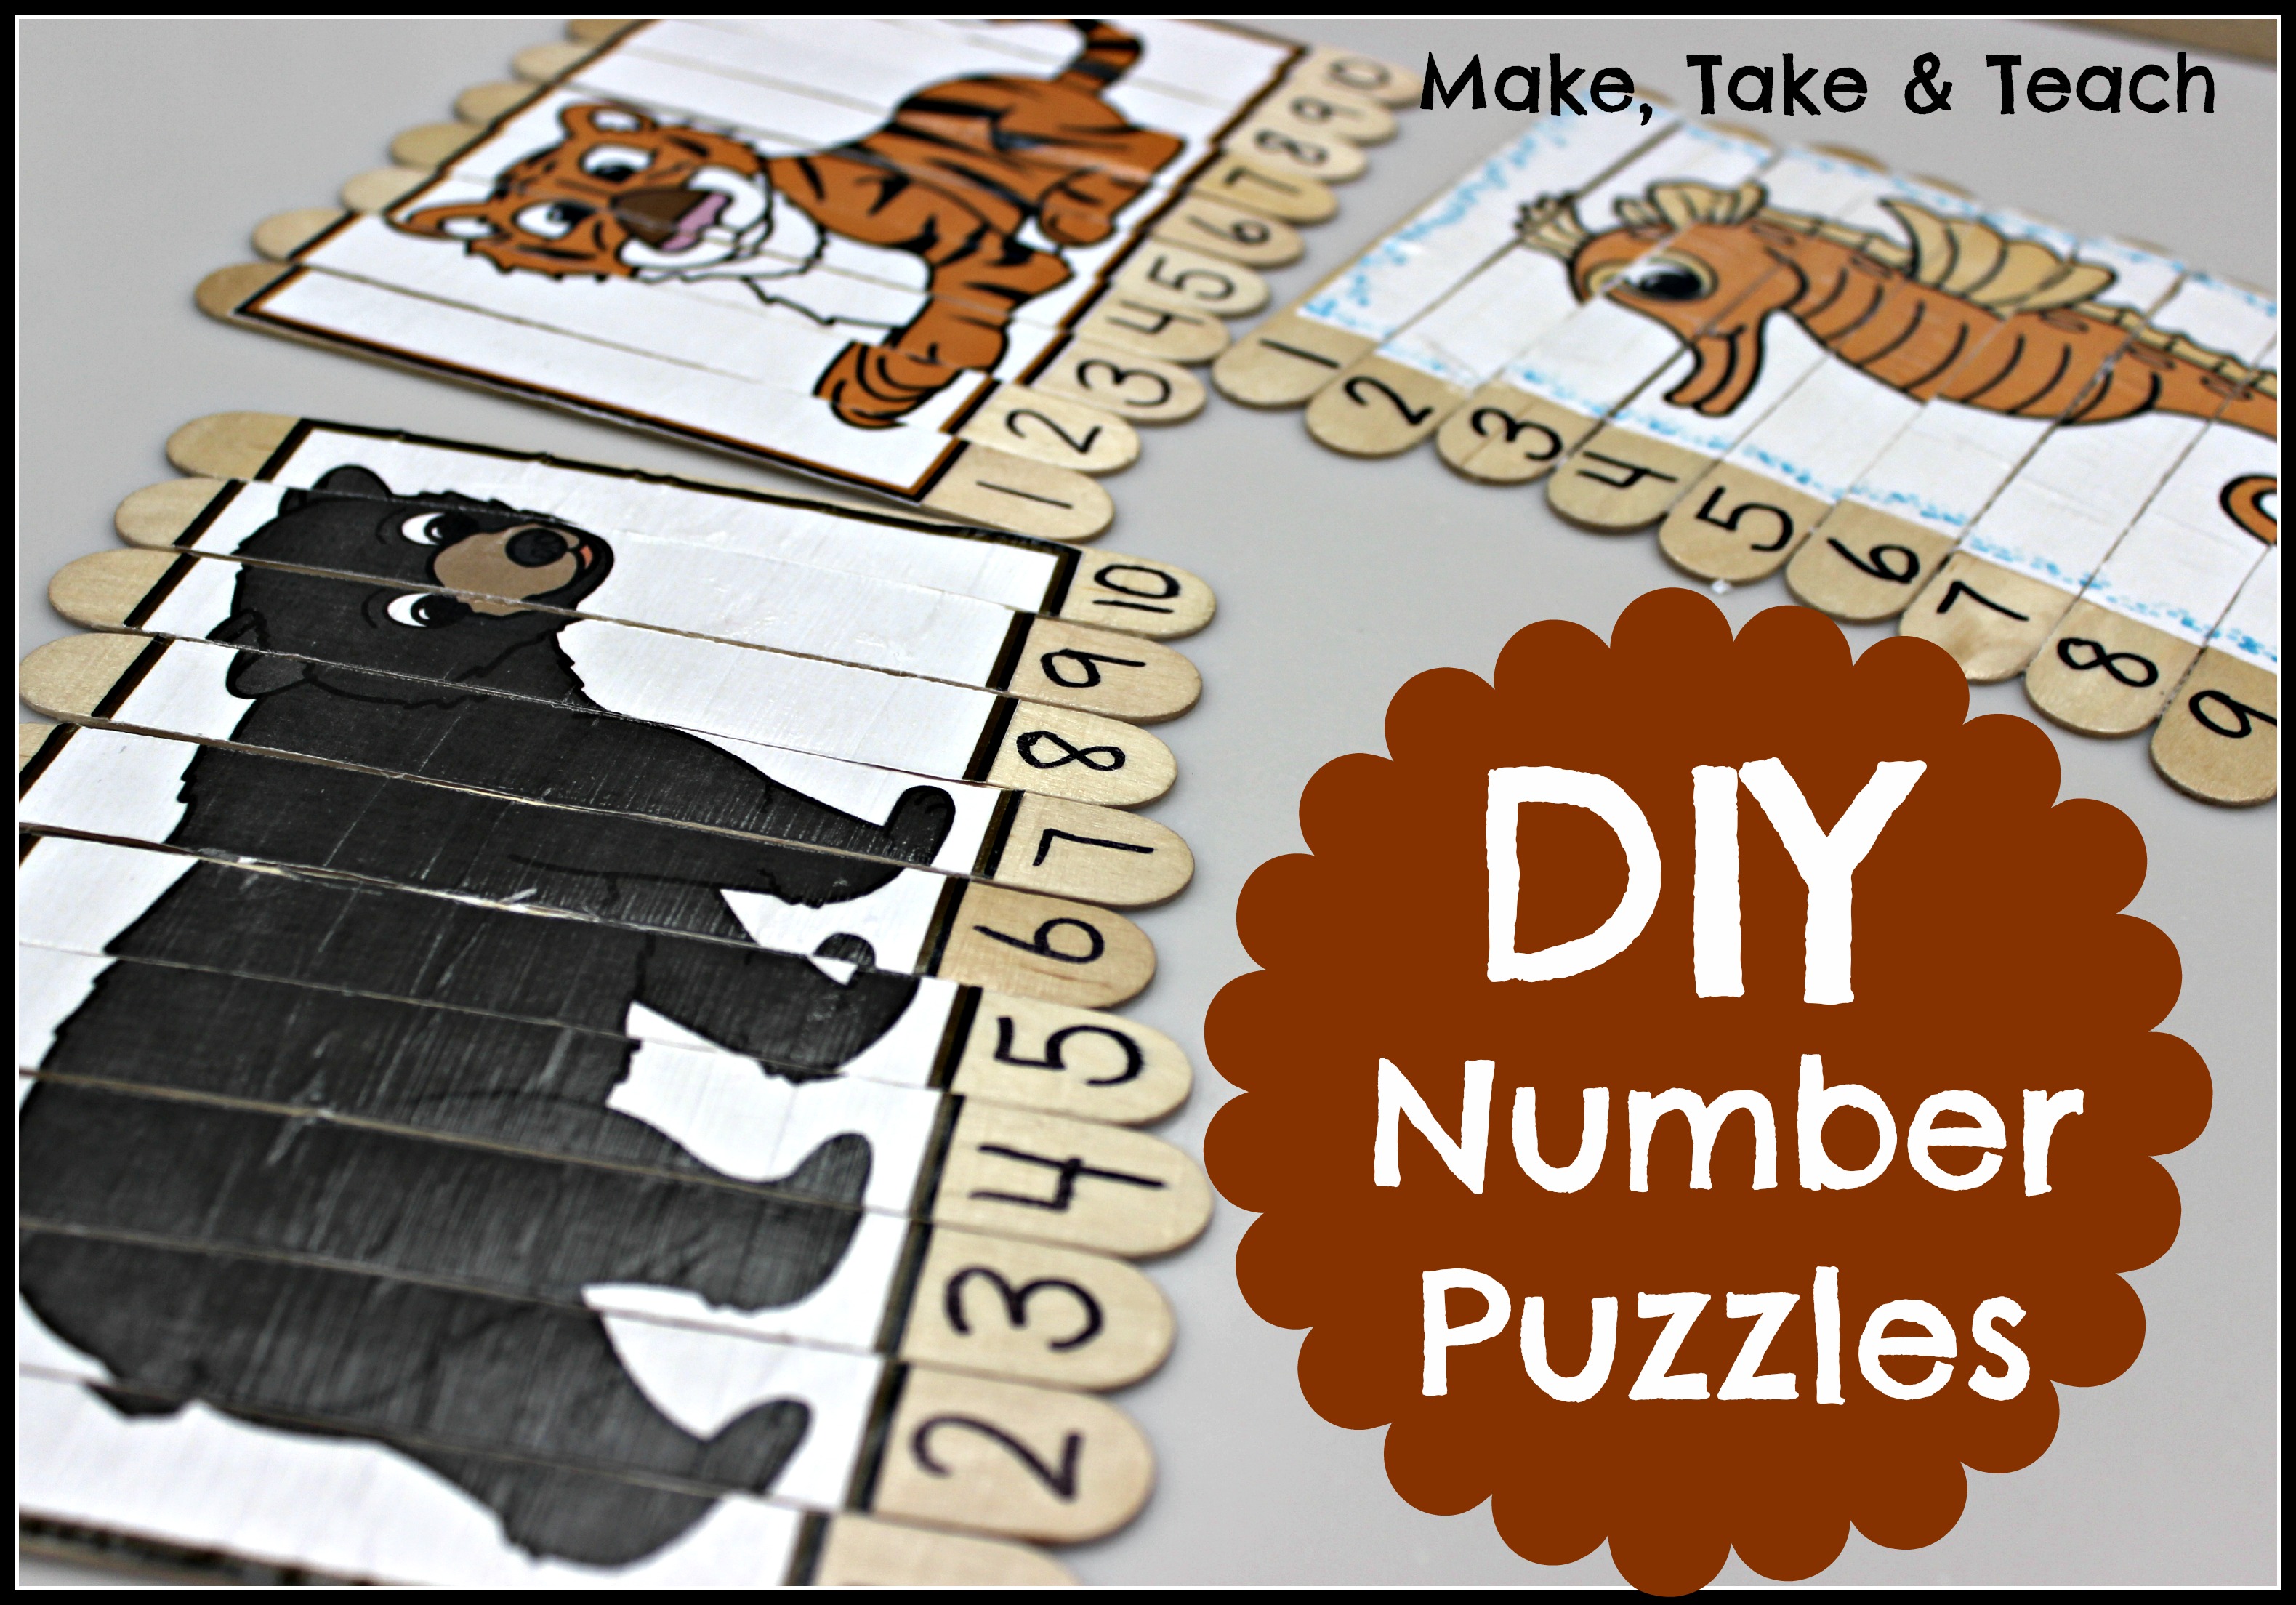 DIY Number Puzzles - Make Take & Teach